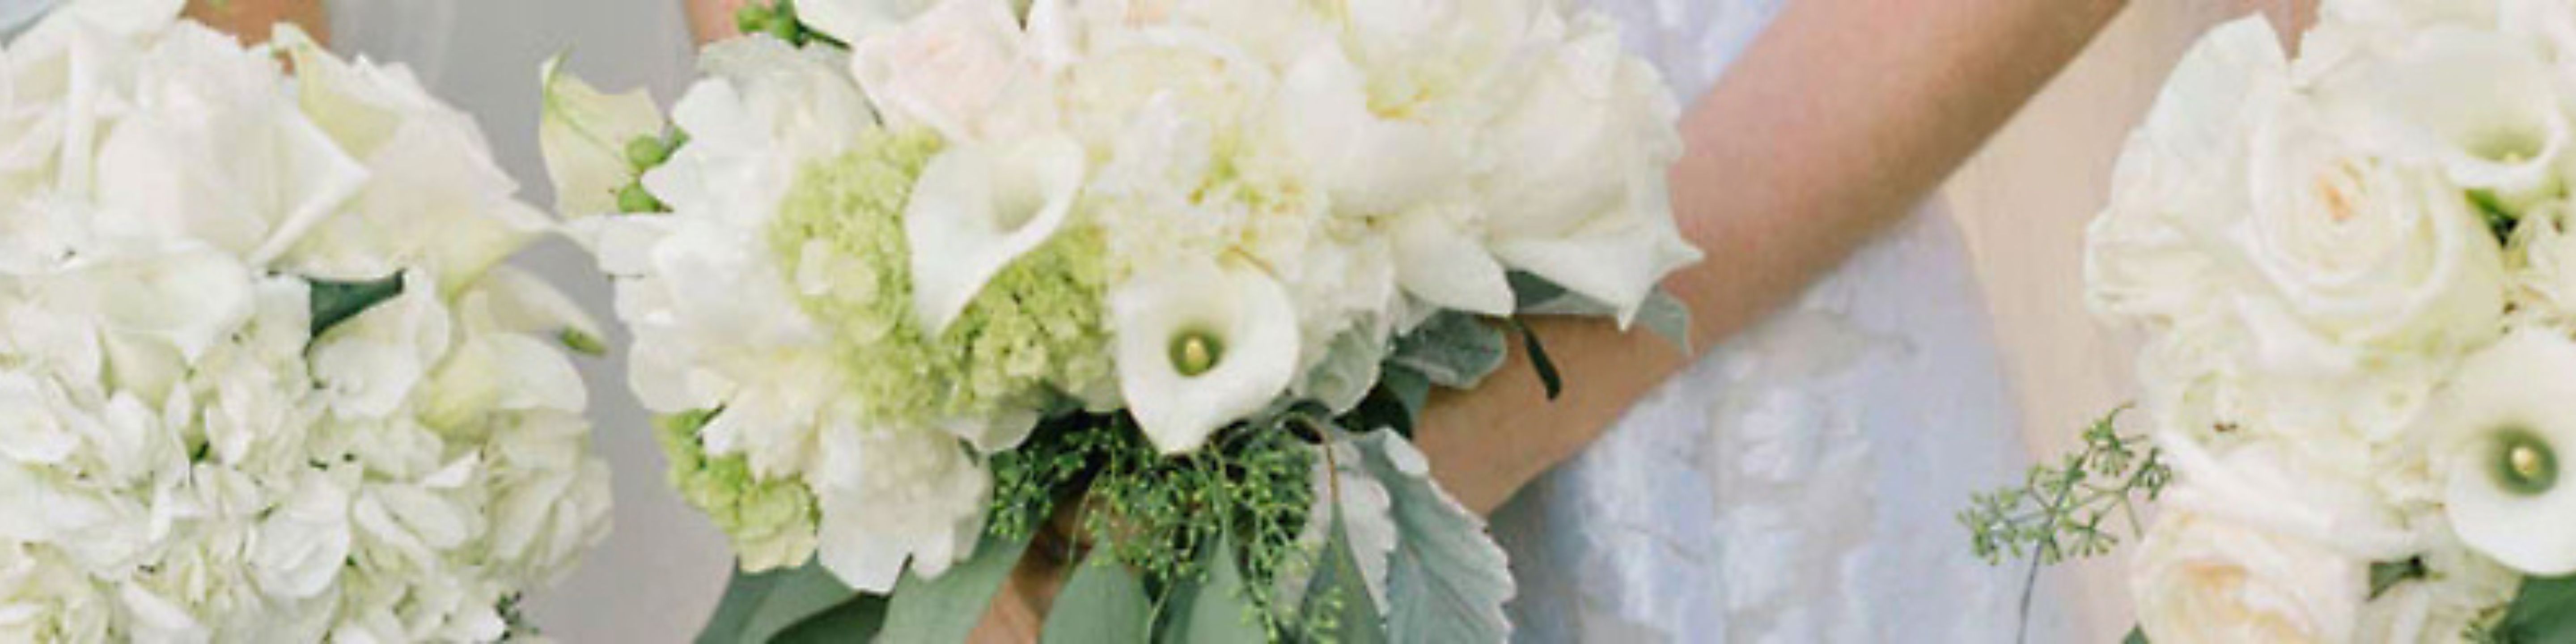 a picture of a diy bridal bouquet